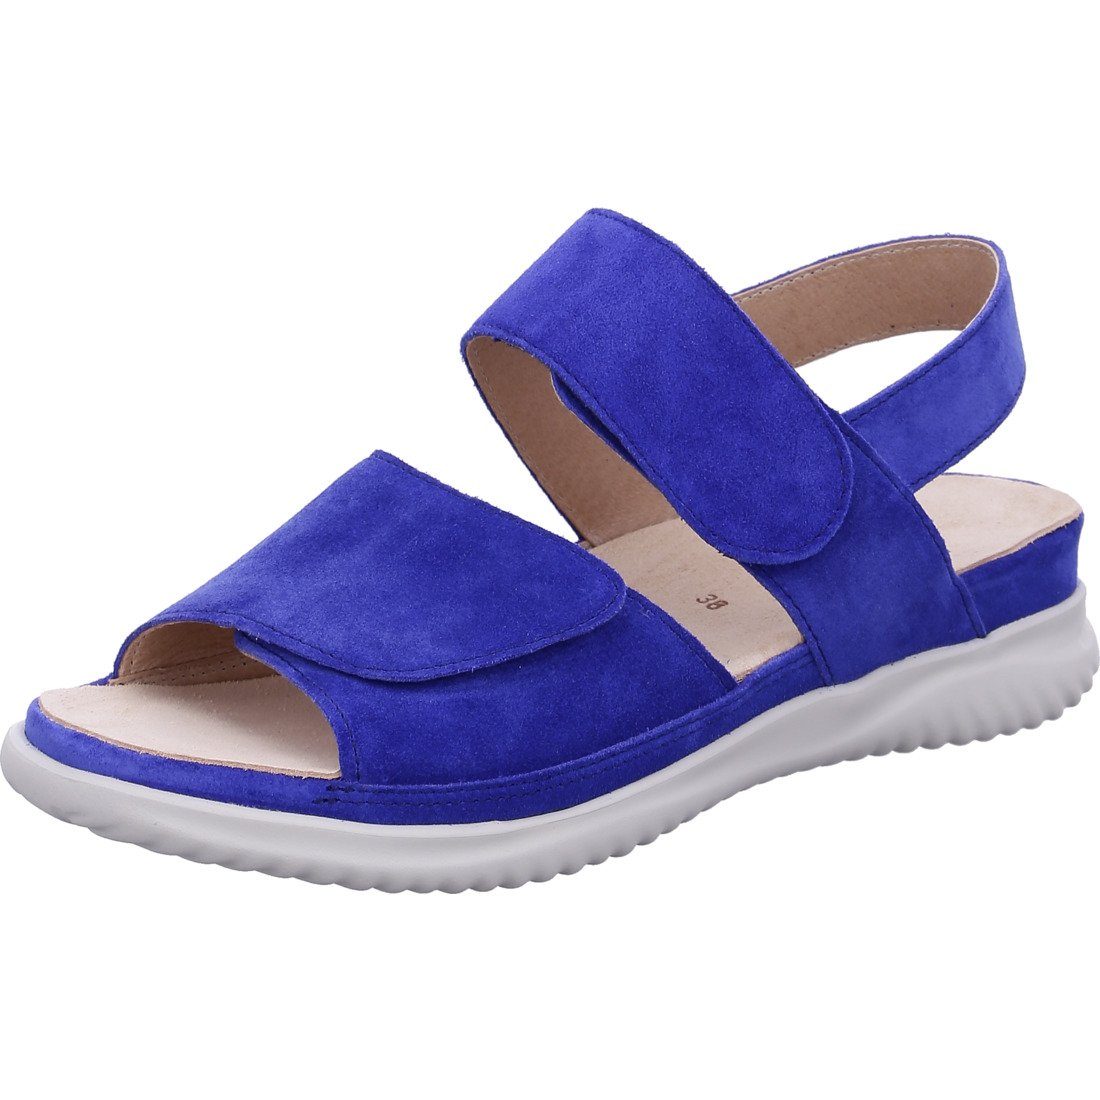 Breeze Damen Hartjes Nubuk Schuhe, Sandalette 048724 blau Sandalette - Hartjes